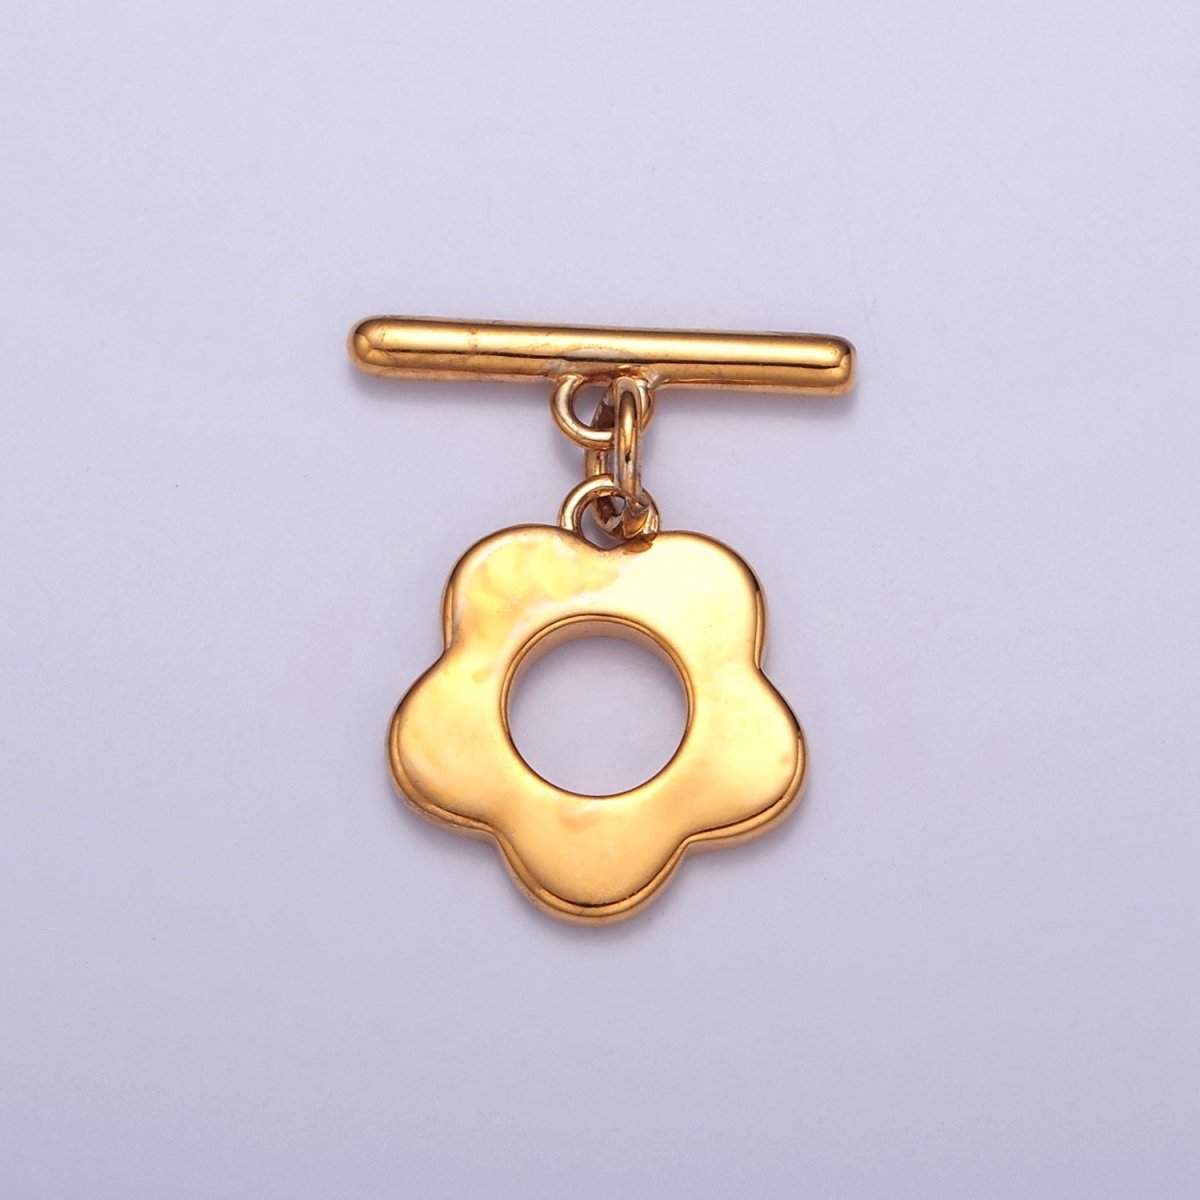 24k Gold Filled Flower Toggle Clasp, Jewelry Clasp OT Clasp Findings L-711 L-712 L-822 - DLUXCA